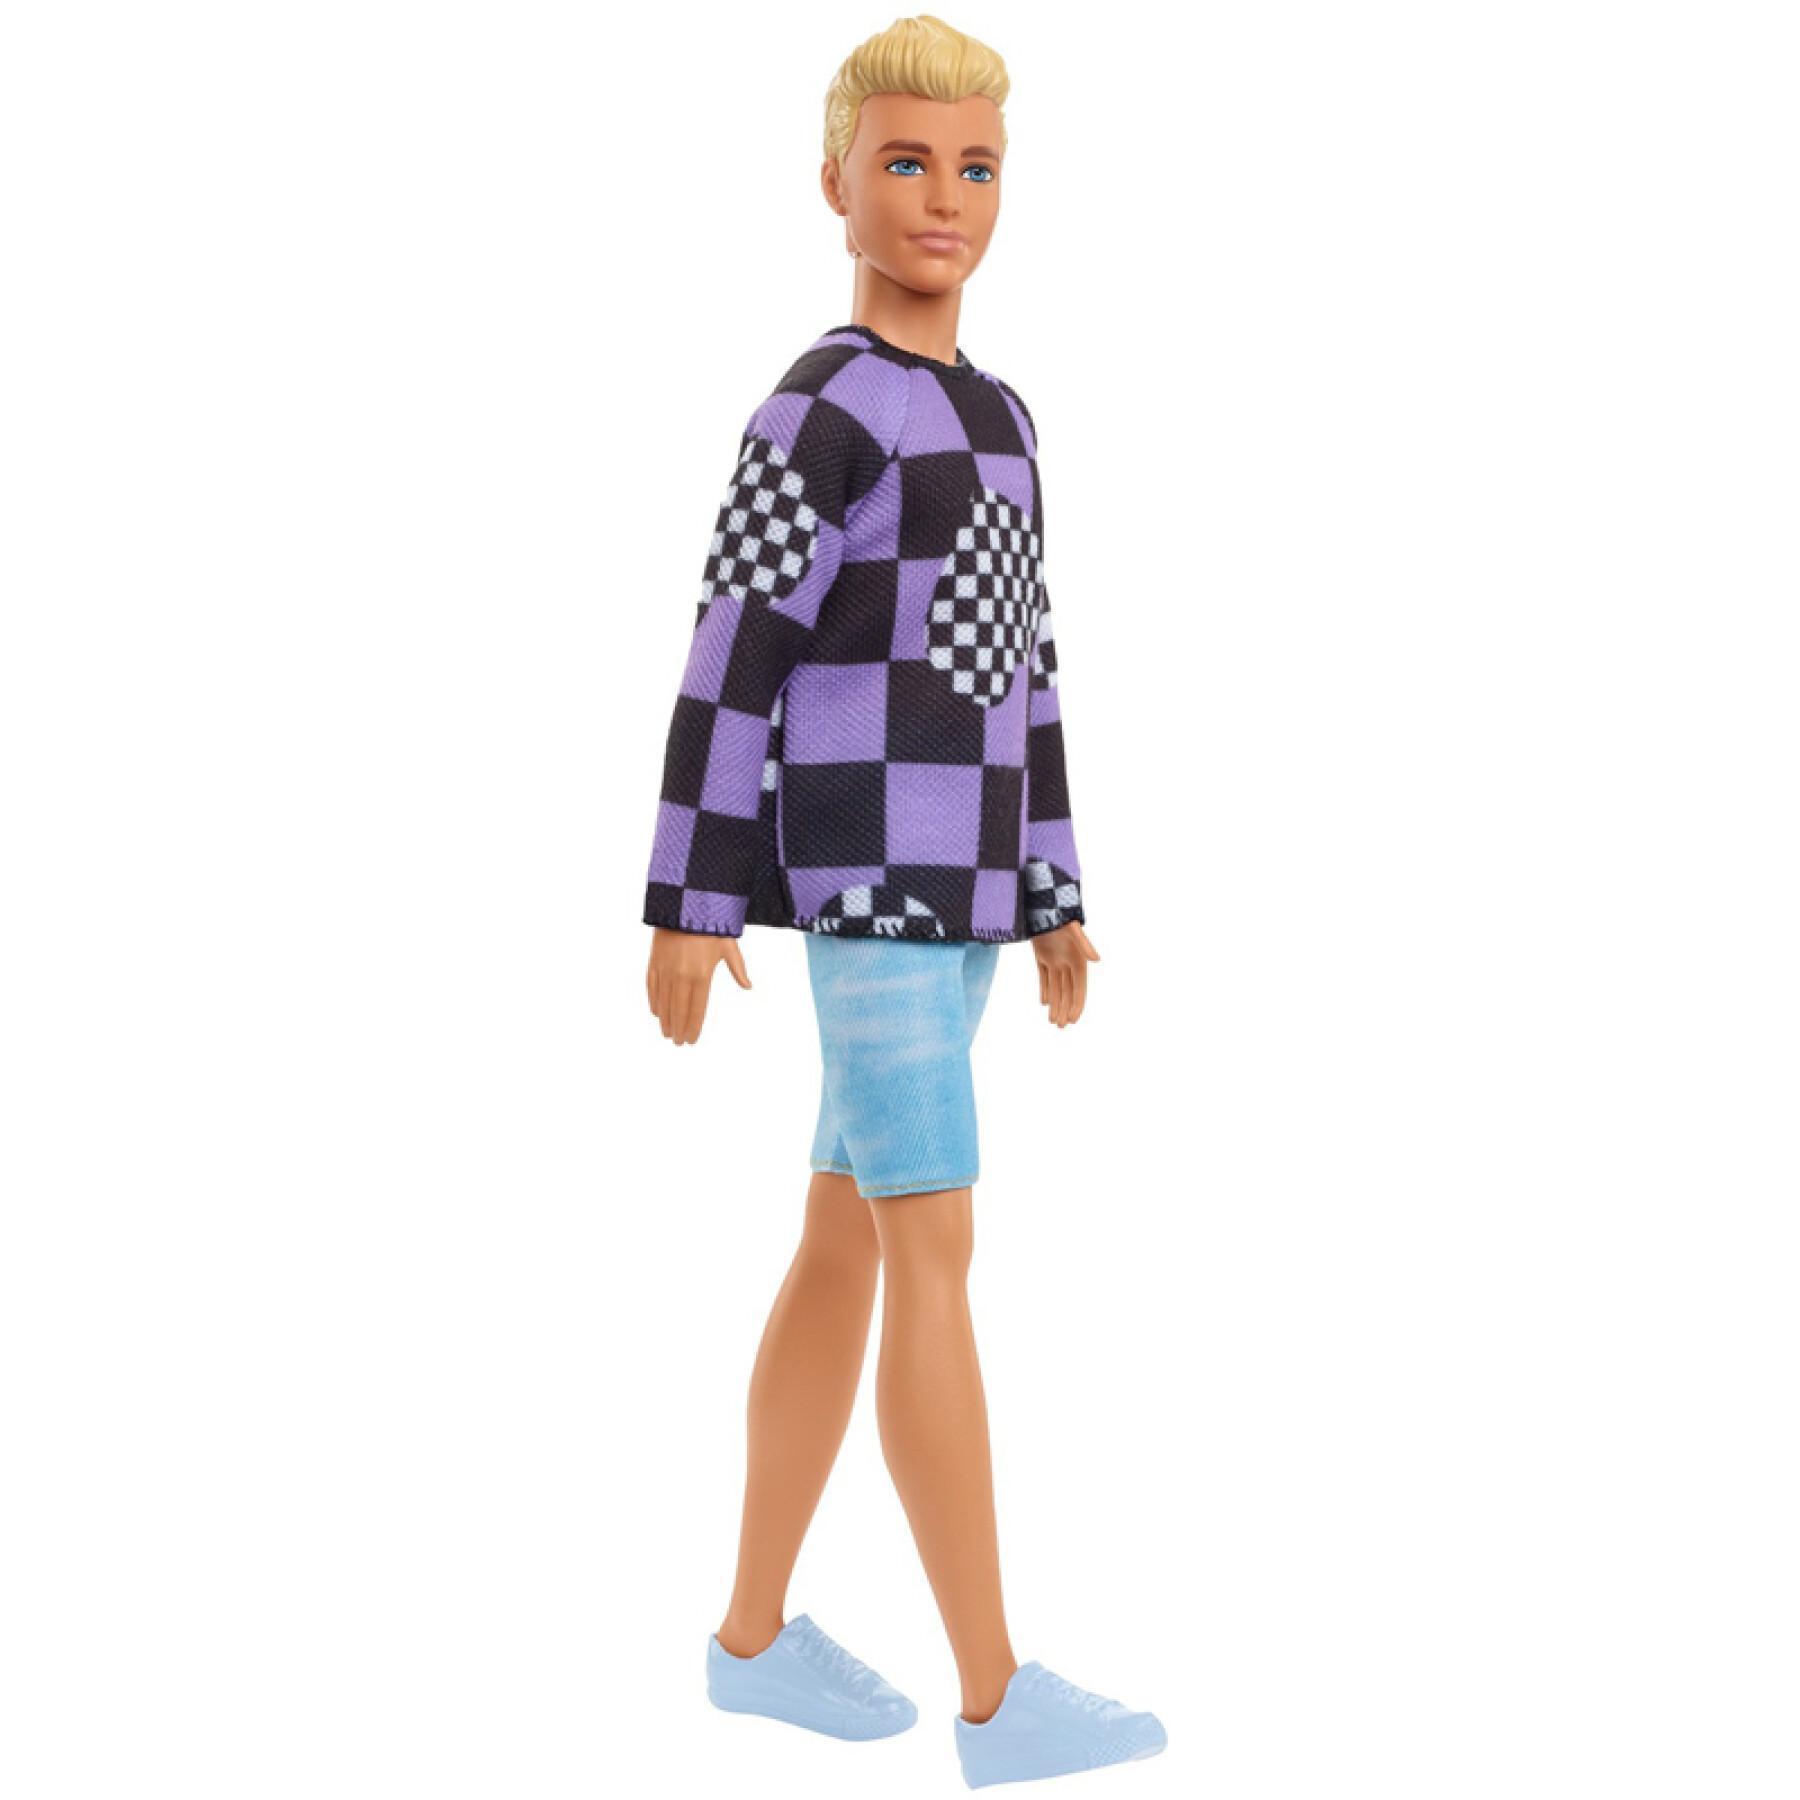 Boneca com camisa de xadrez Mattel France Ken fashion